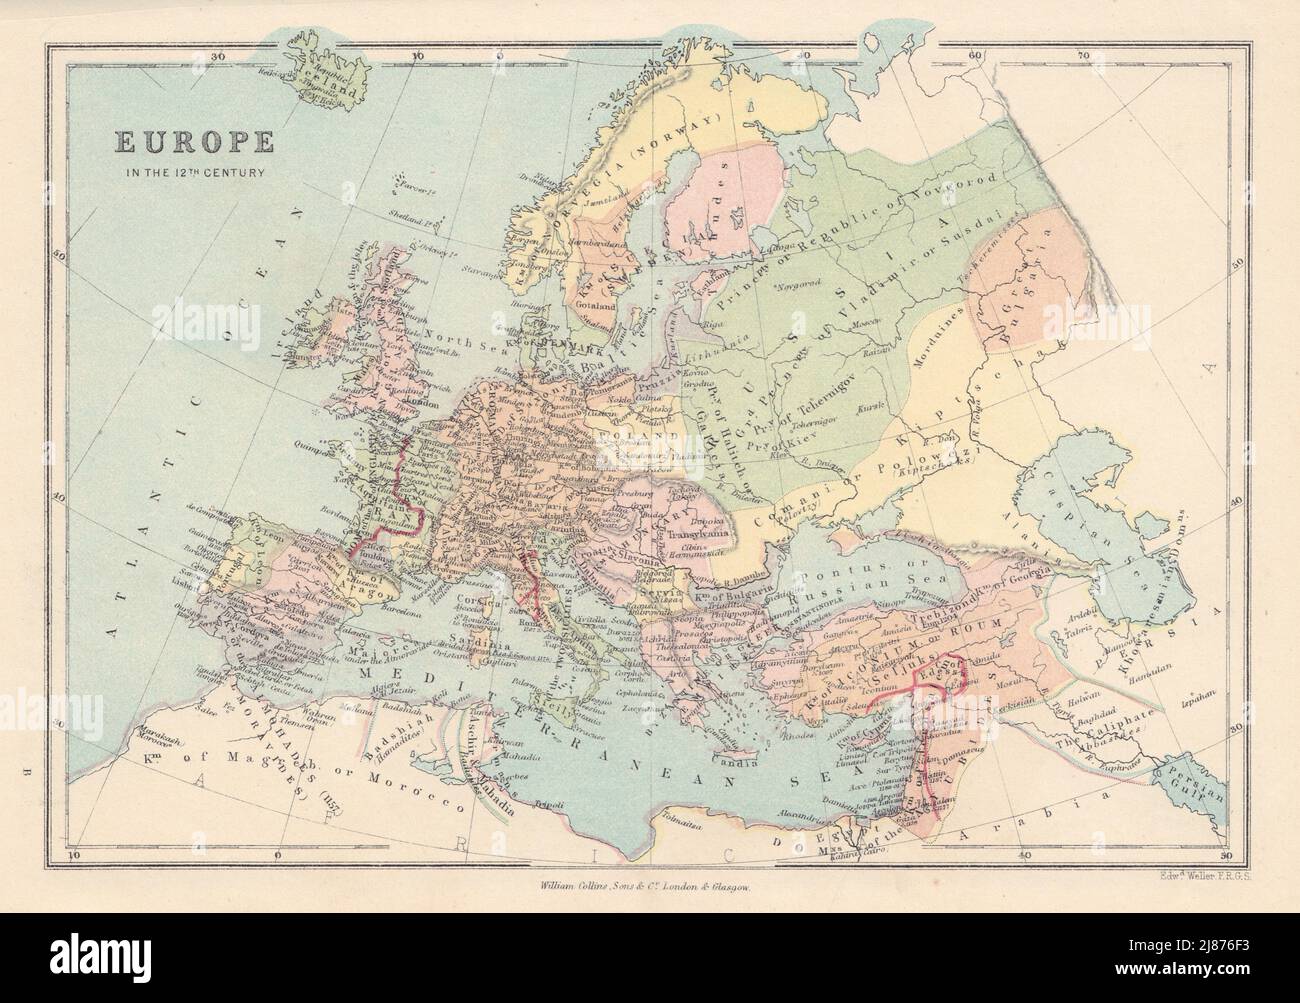 12TH CENTURY EUROPE Divided Ireland Holy Roman Empire Almovarides 1873 old map Stock Photo